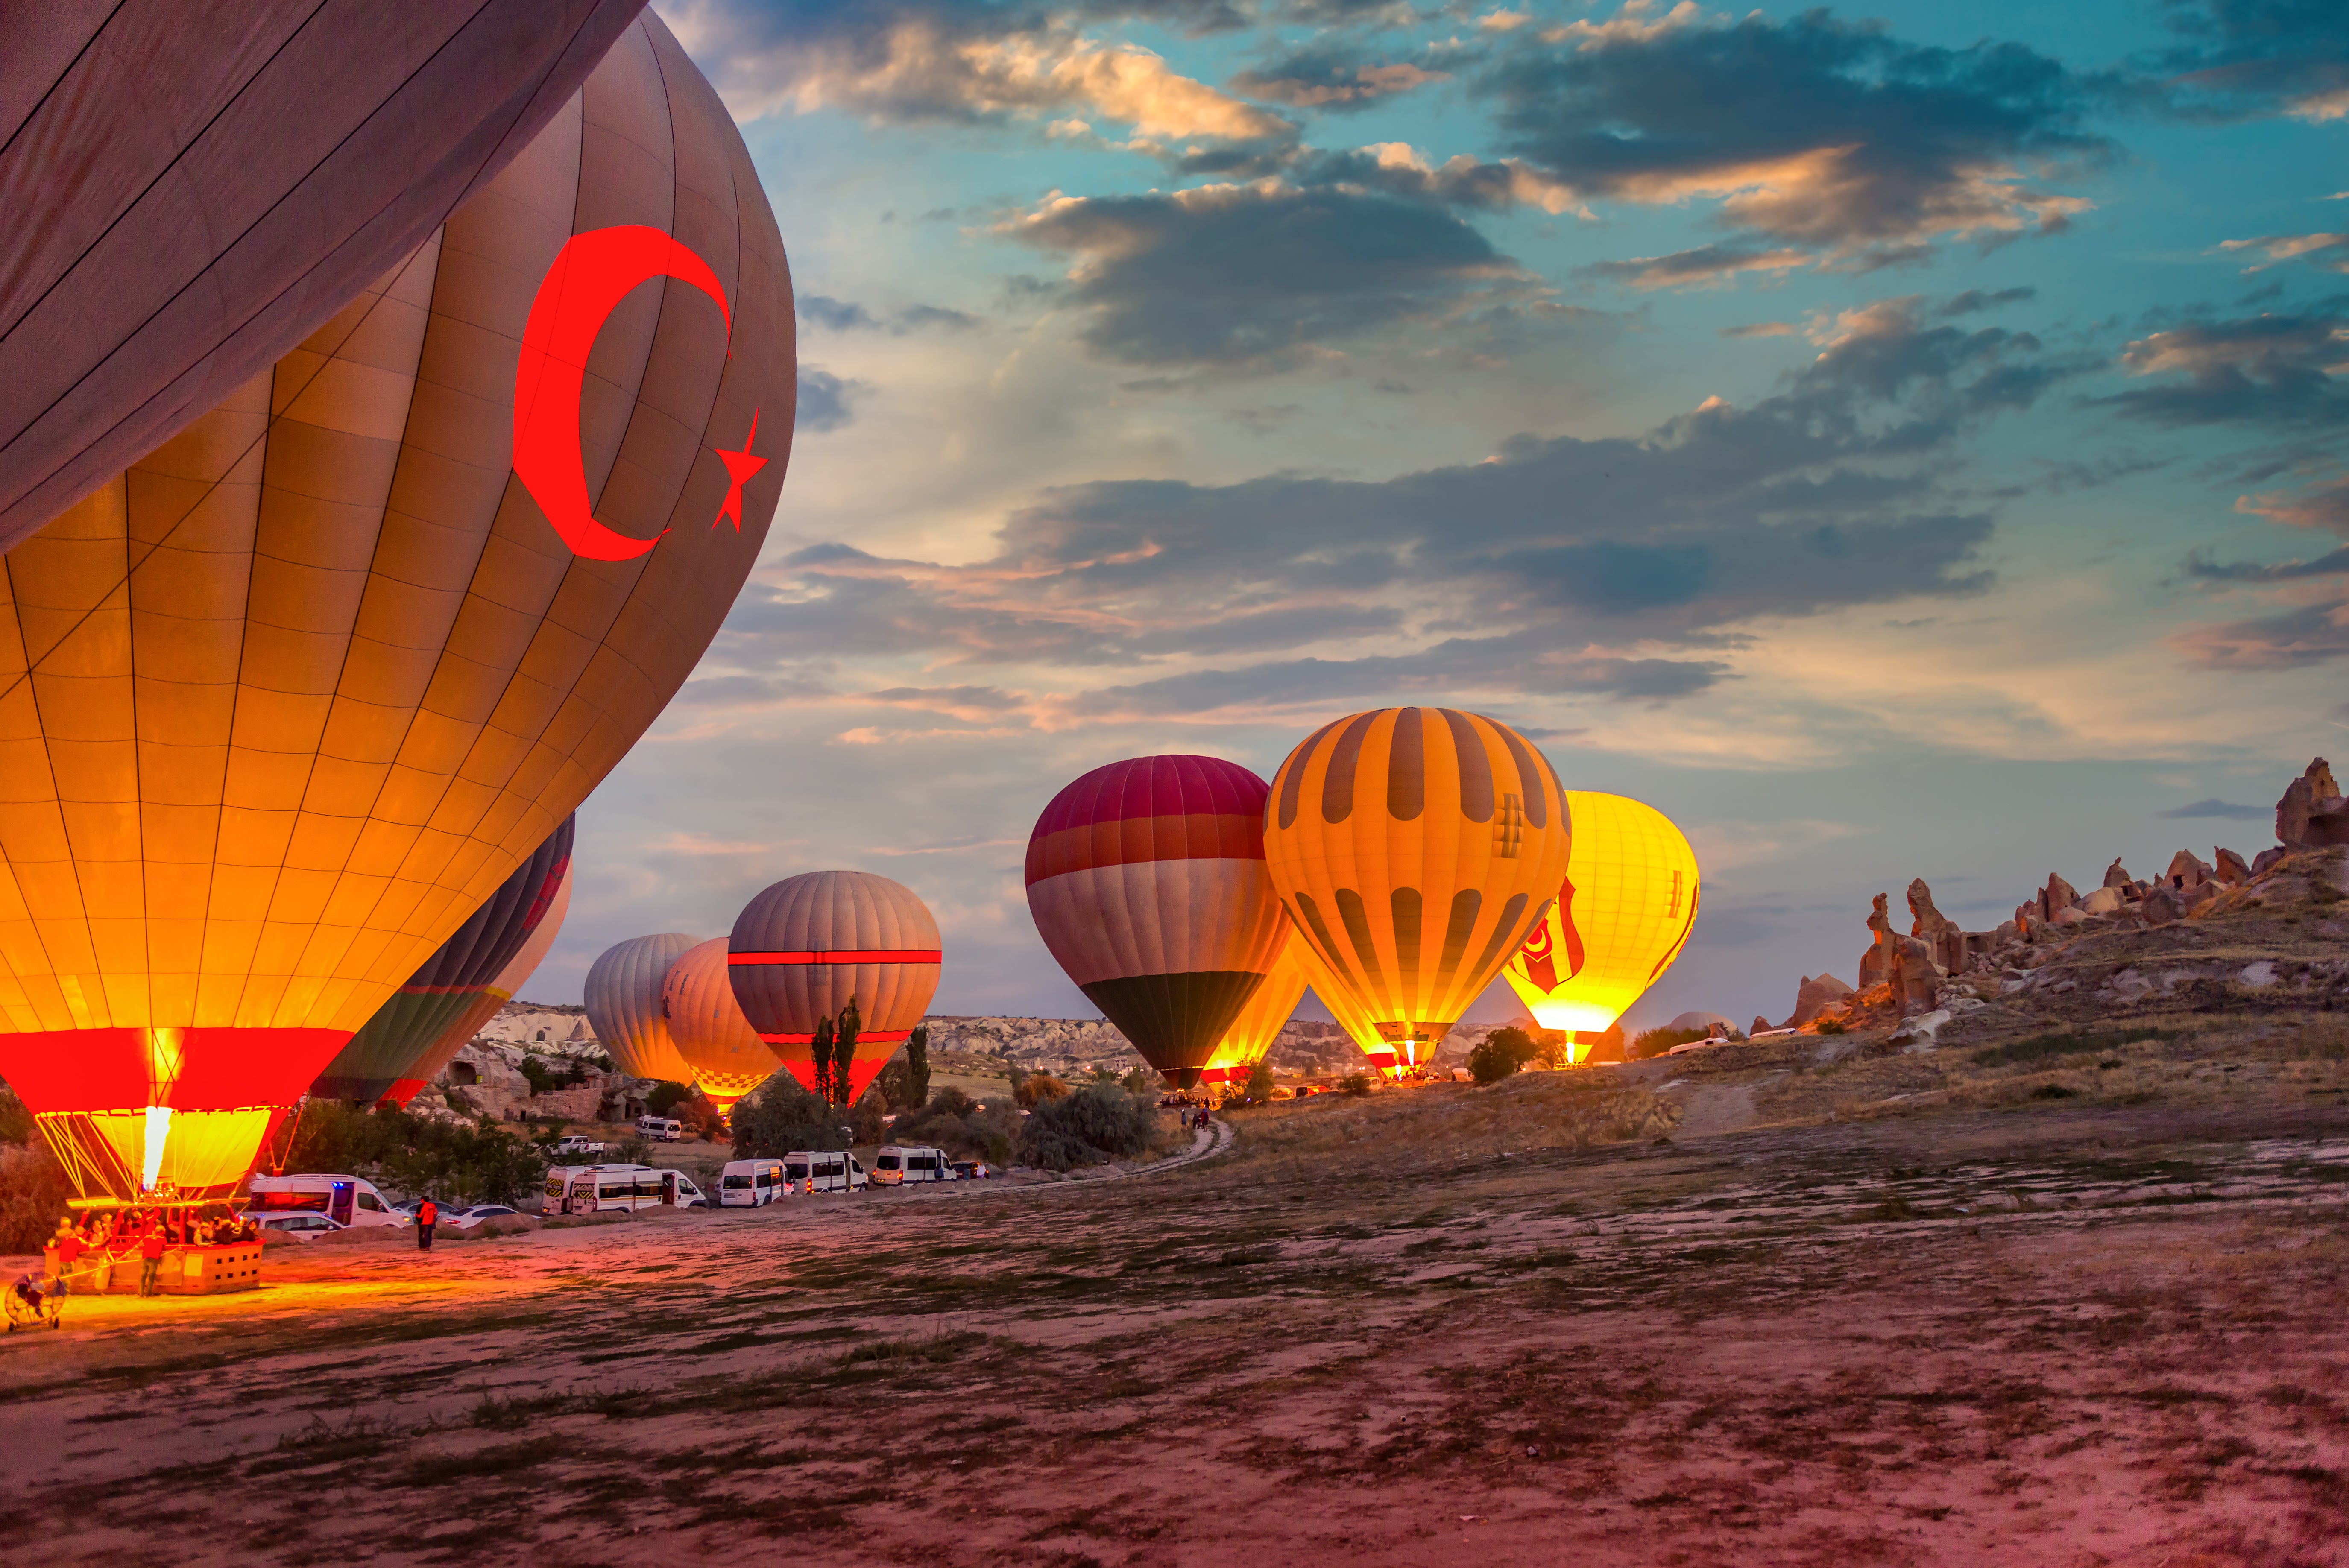 Hot air balloons in Cappadocia, Turkey launch at sunrise